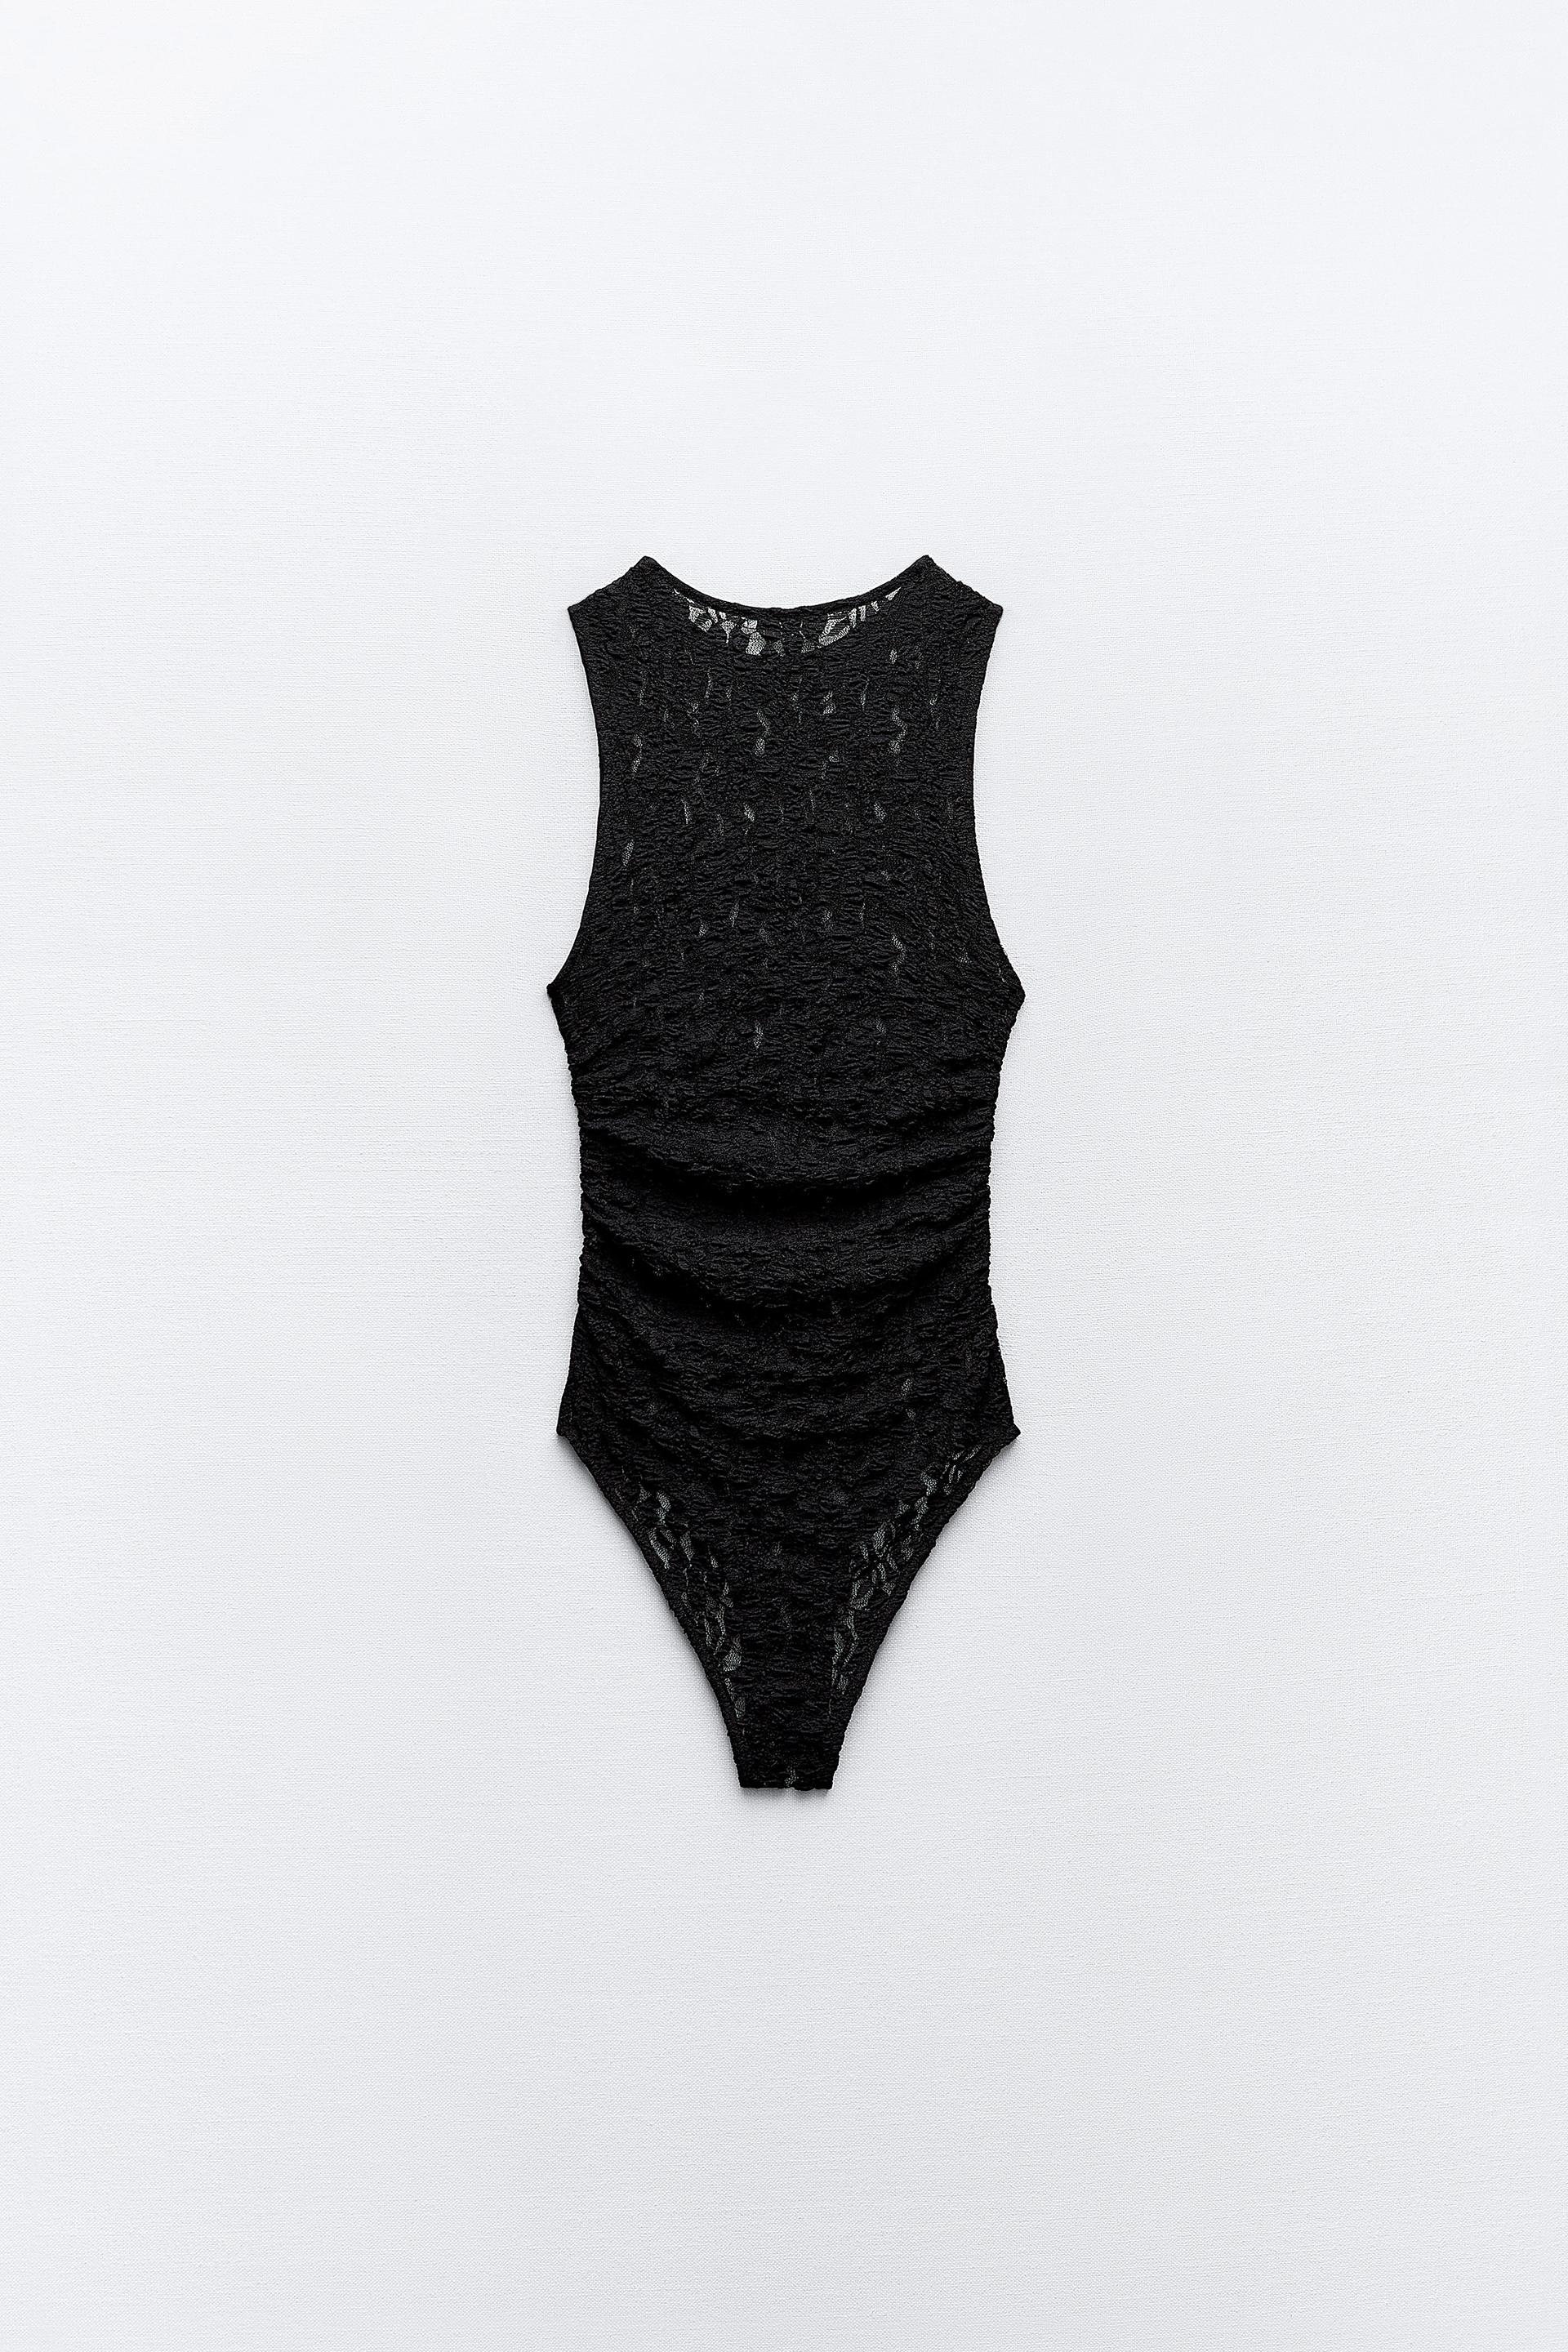 Zara Women's Black Lace Ribbed Bodysuit Size XS- Small